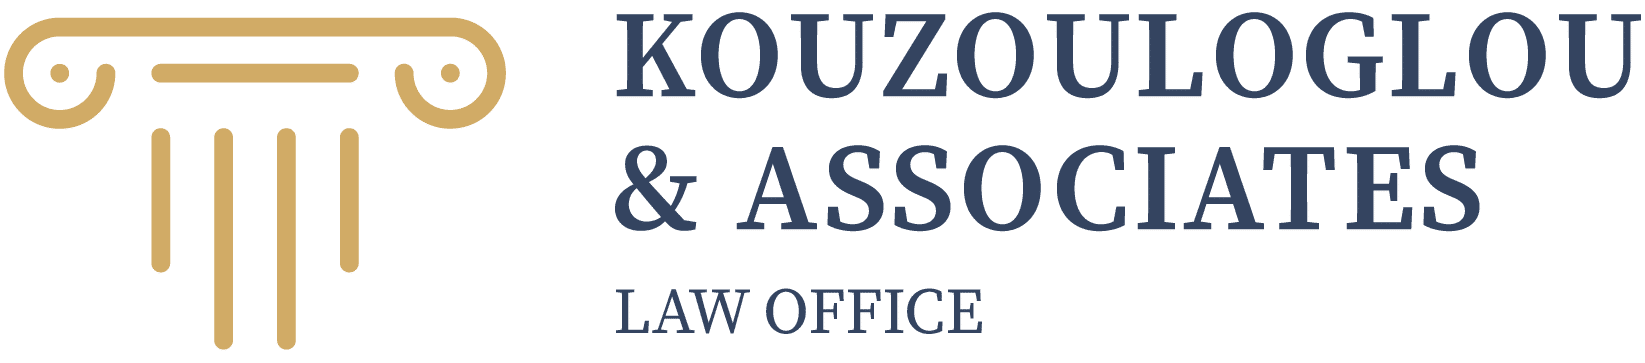 KOUZOULOGLOU & ASSOCIATES REAL ESTATE LAW OFFICE